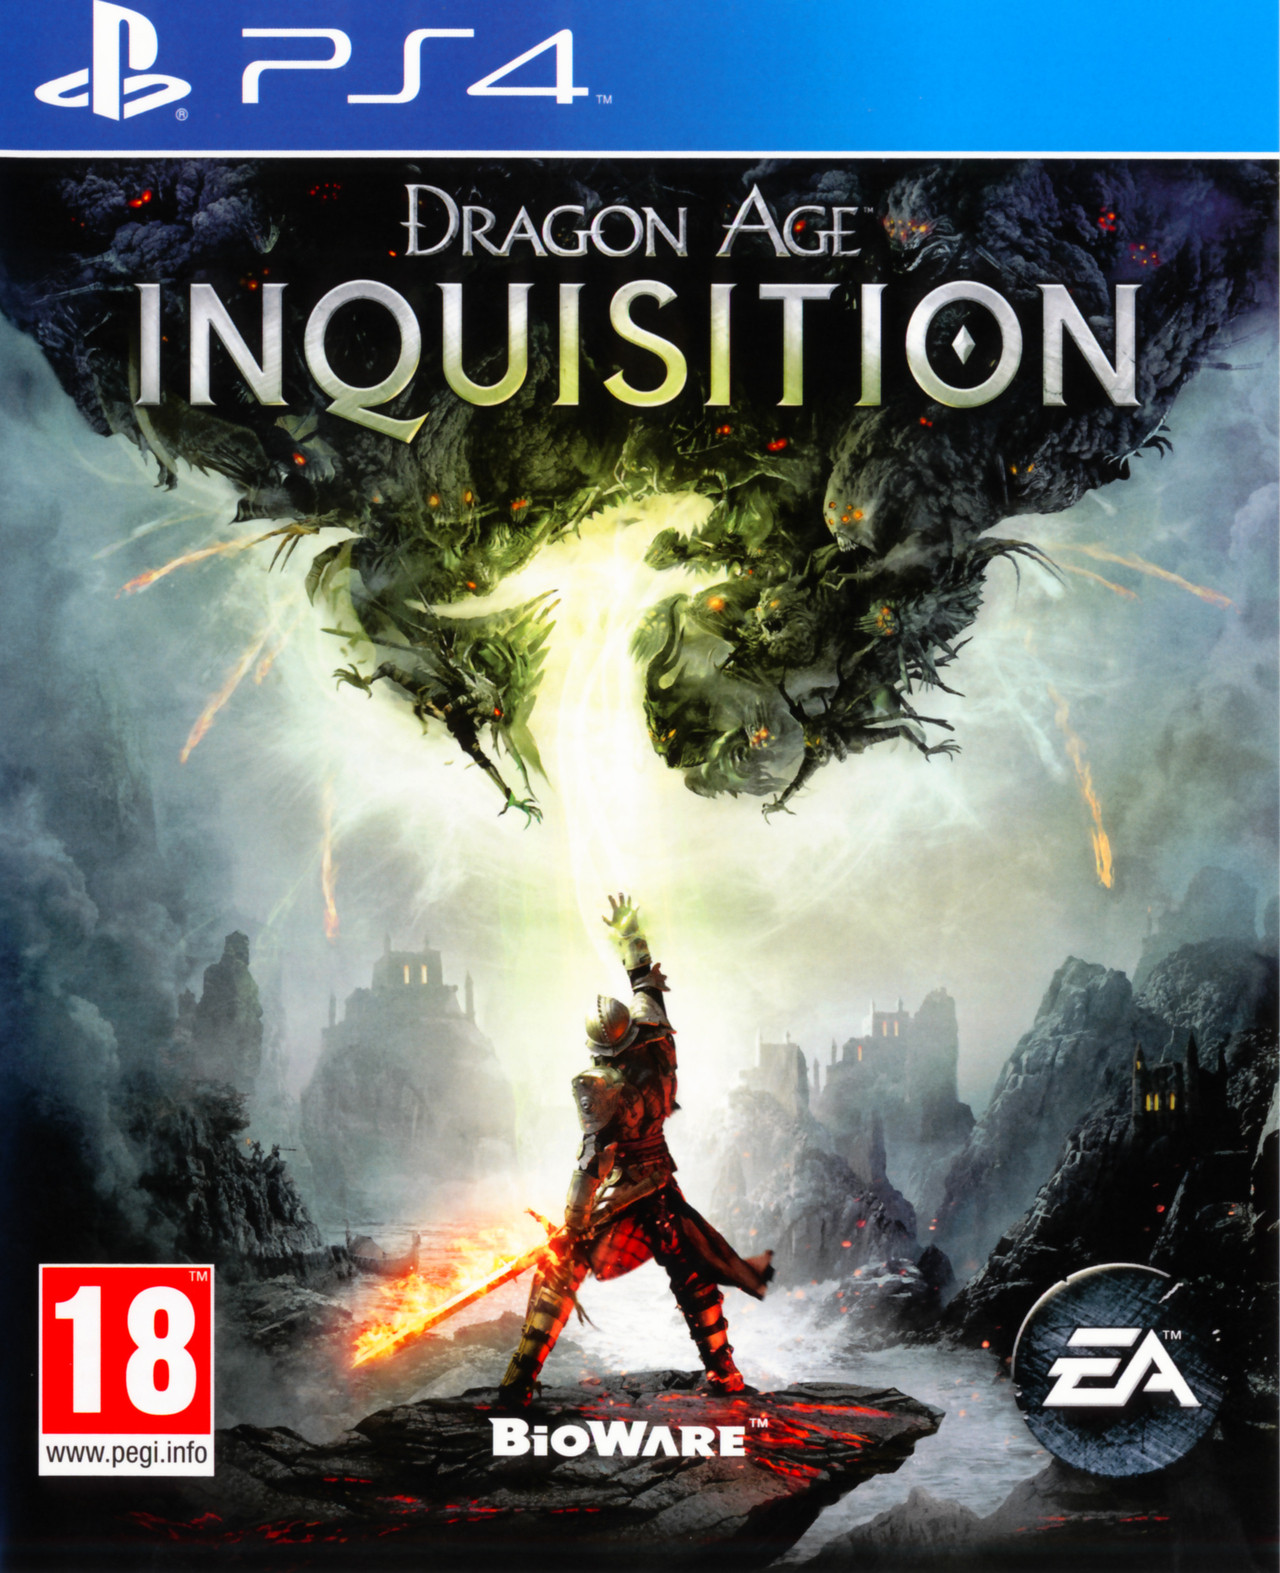 http://image.jeuxvideo.com/images/jaquettes/00049198/jaquette-dragon-age-inquisition-playstation-4-ps4-cover-avant-g-1416589242.jpg